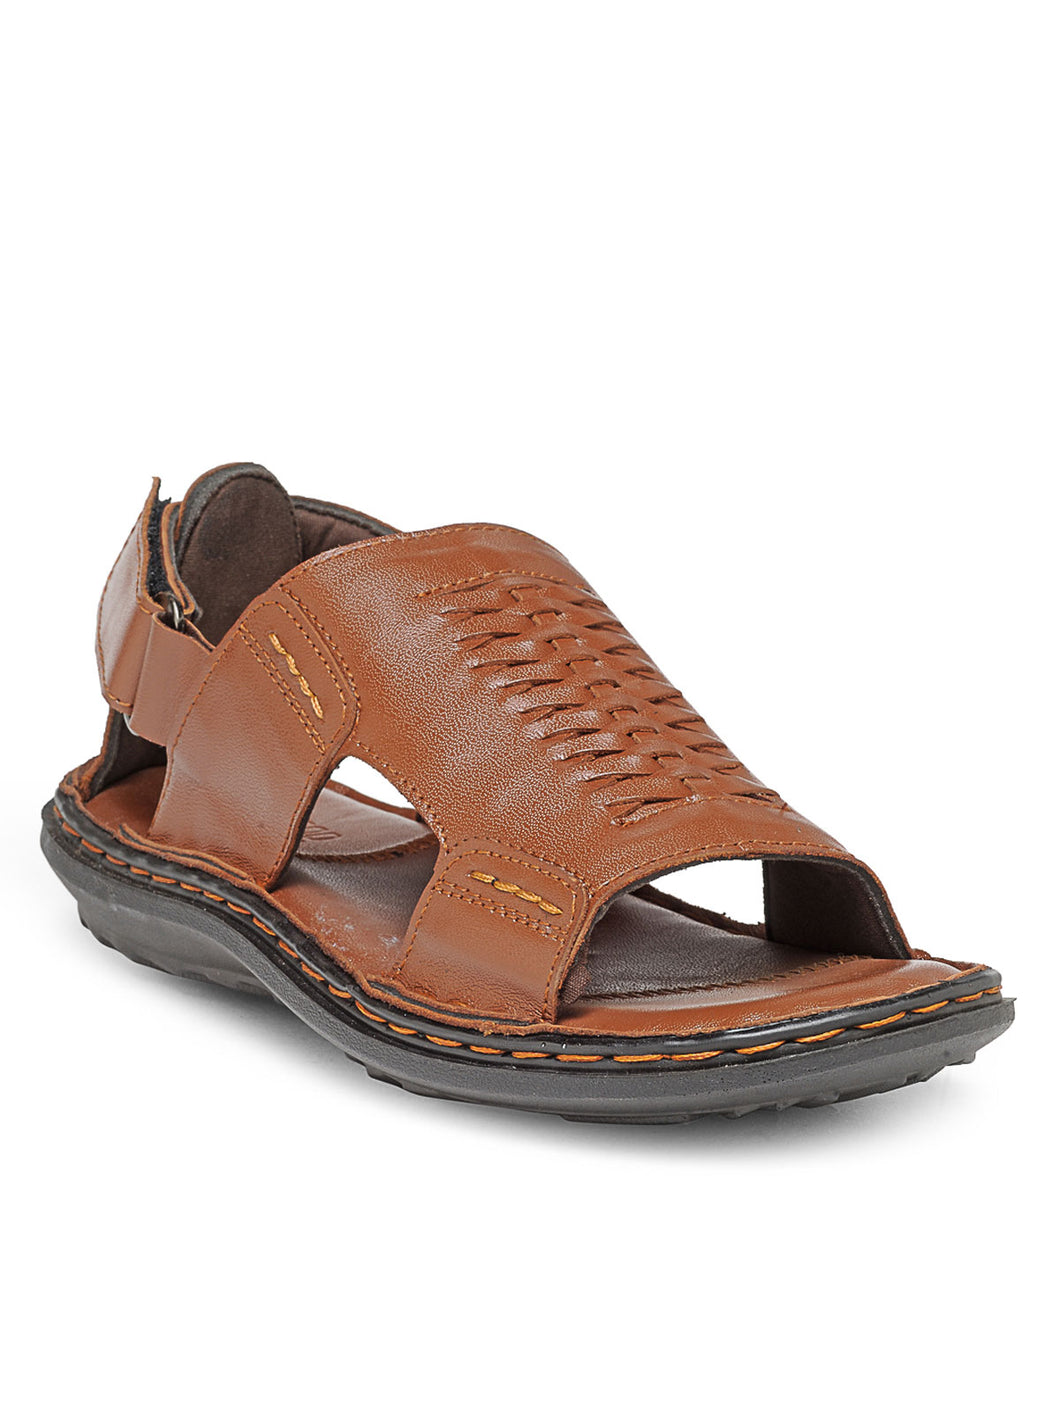 Teakwood Men's Real Leather Sandals